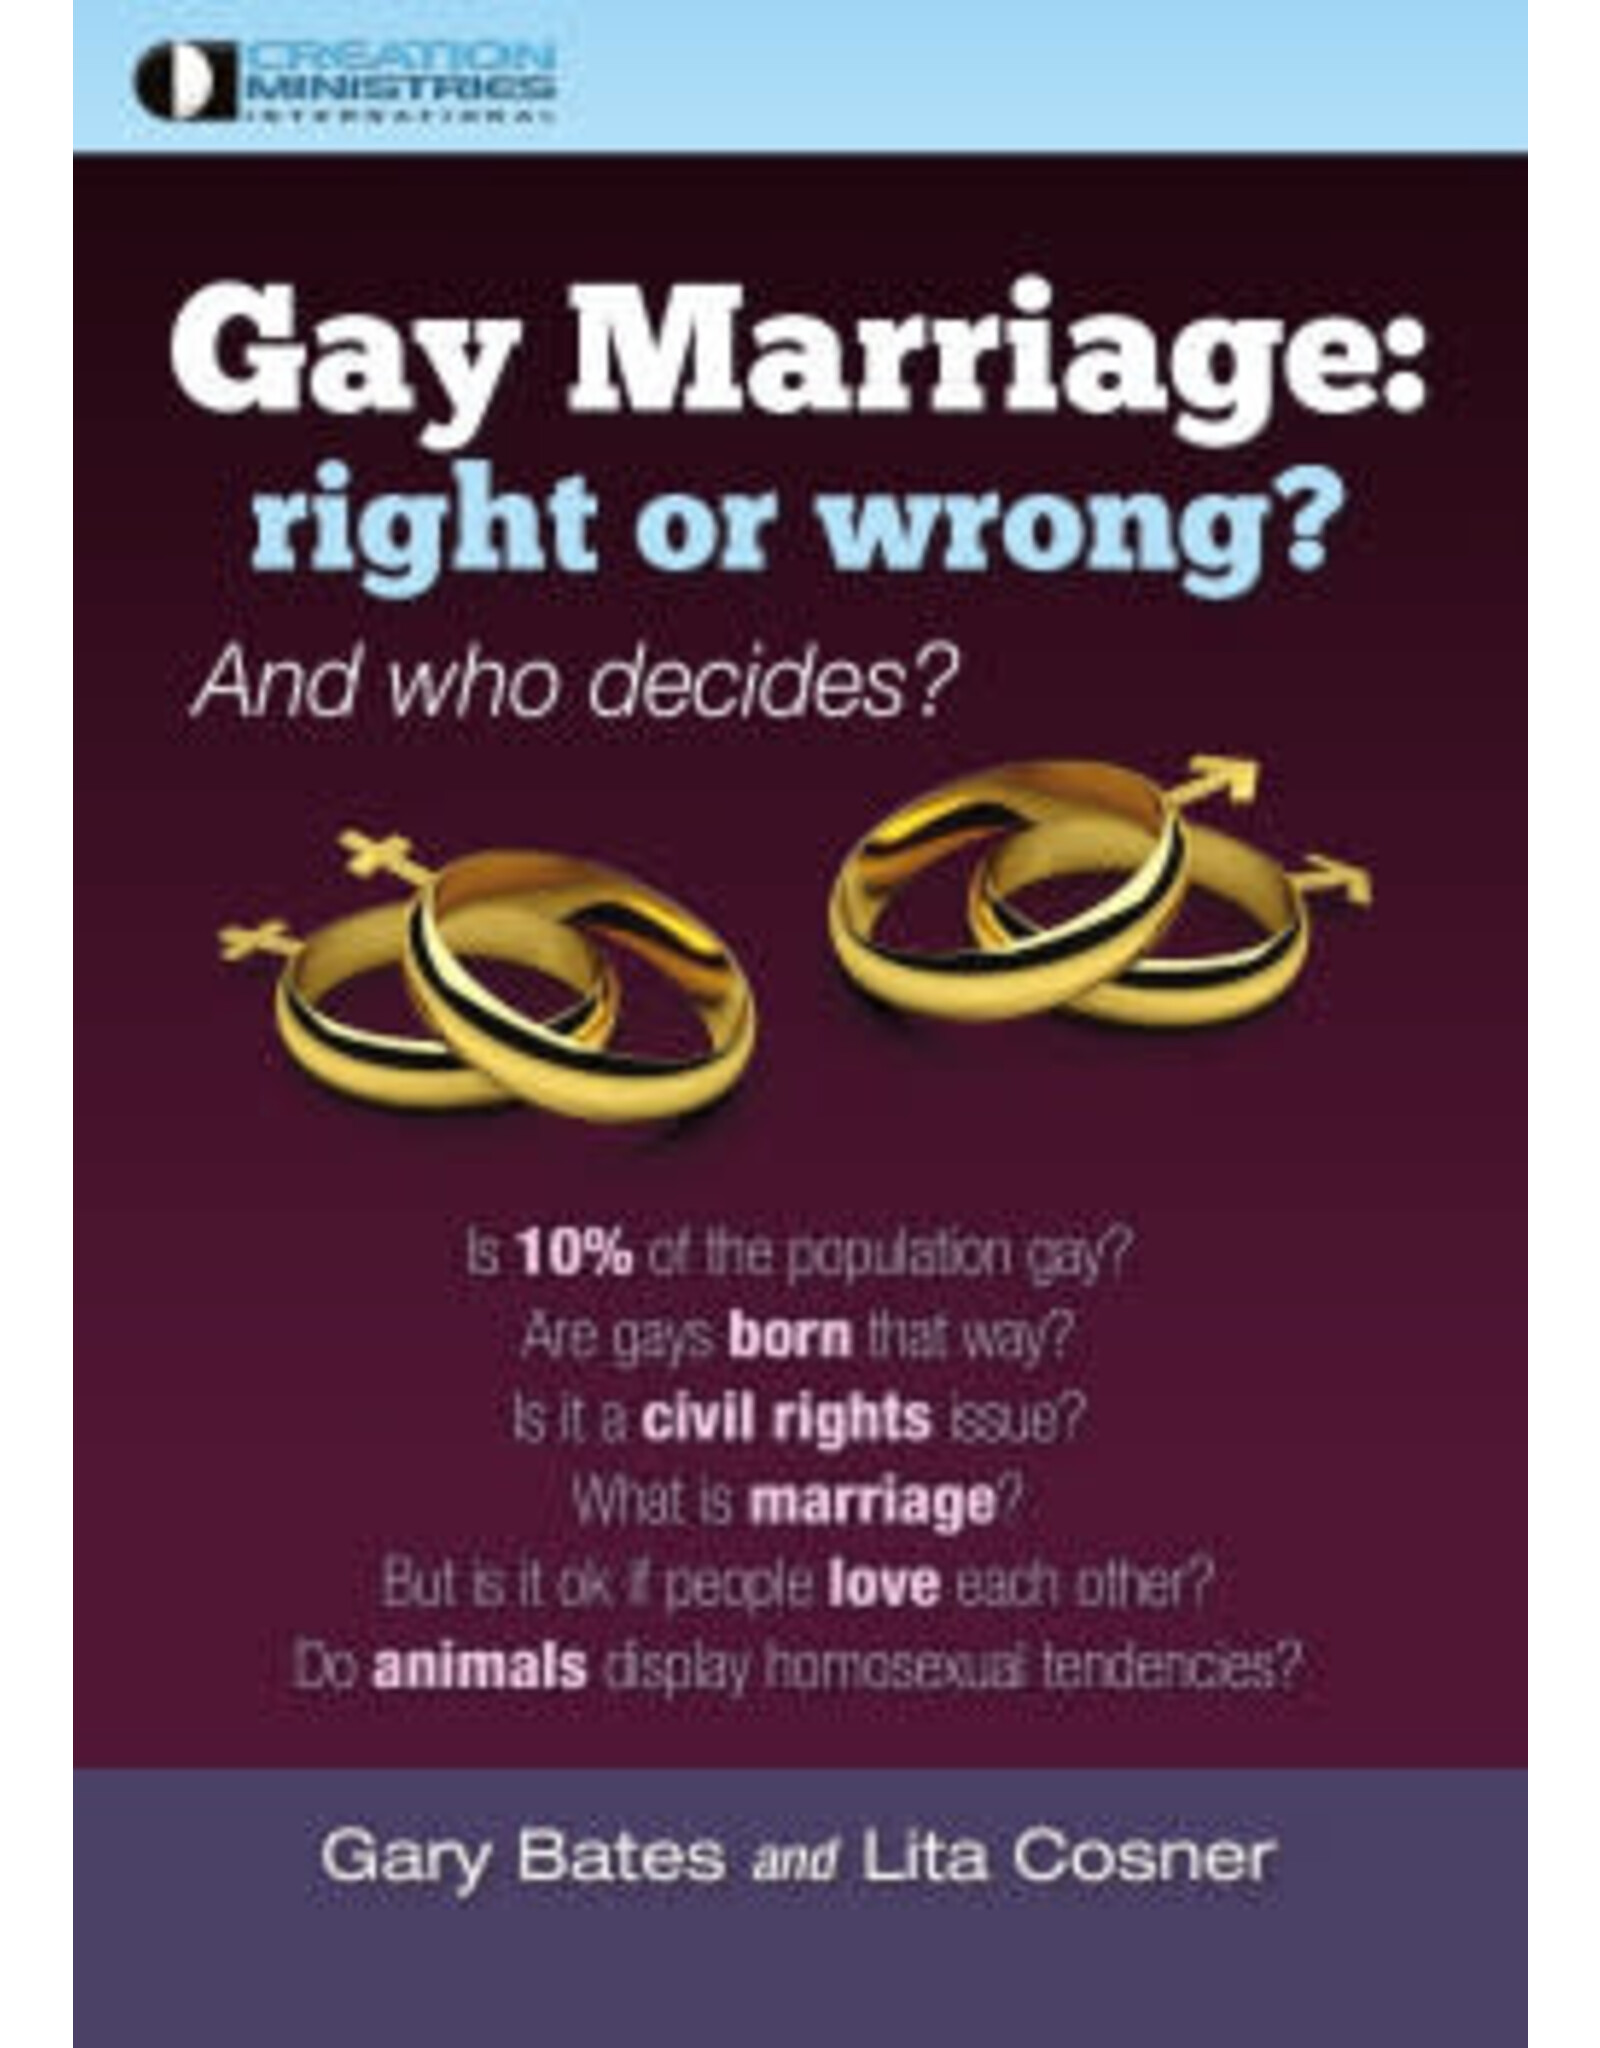 Gary Bates Gay Marriage: right or wrong